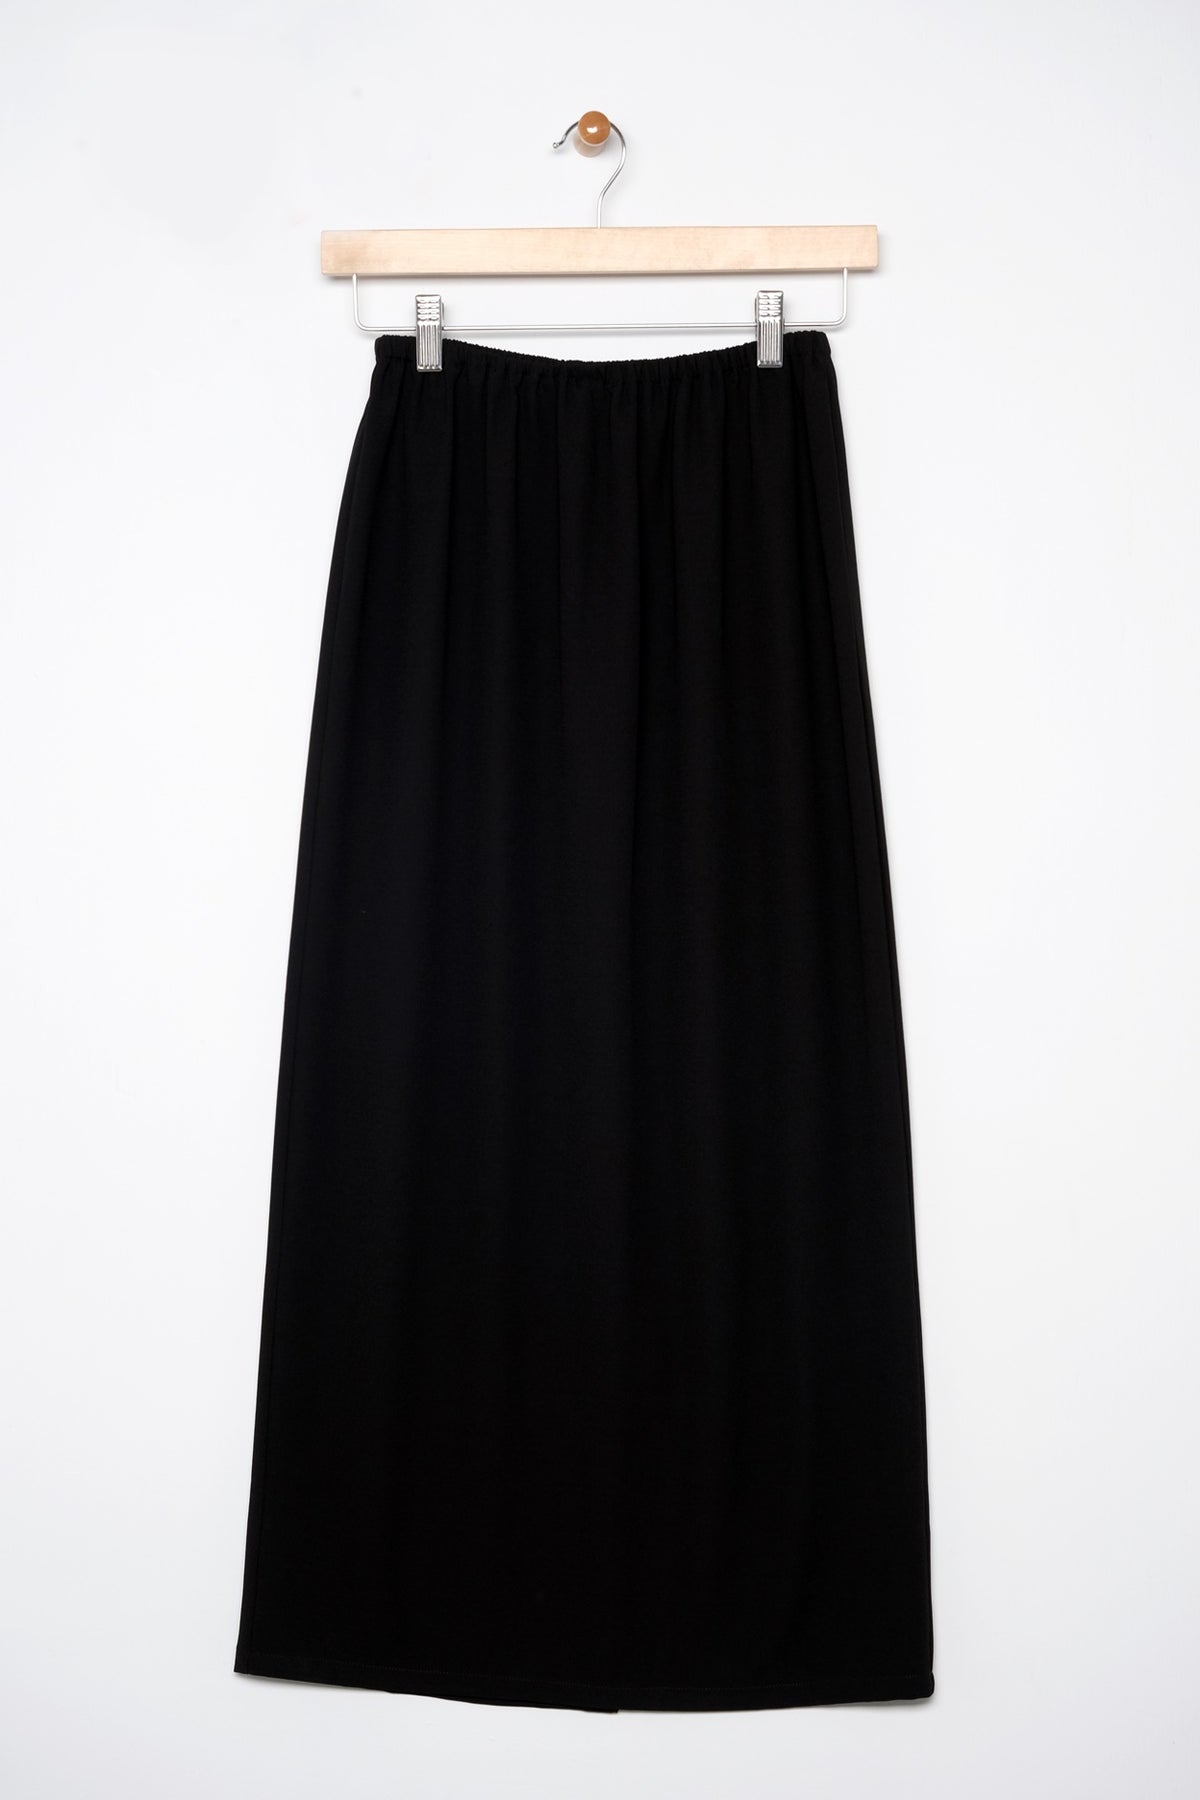 34" Crepe Skirt with Back Slit New Orleans Wovens